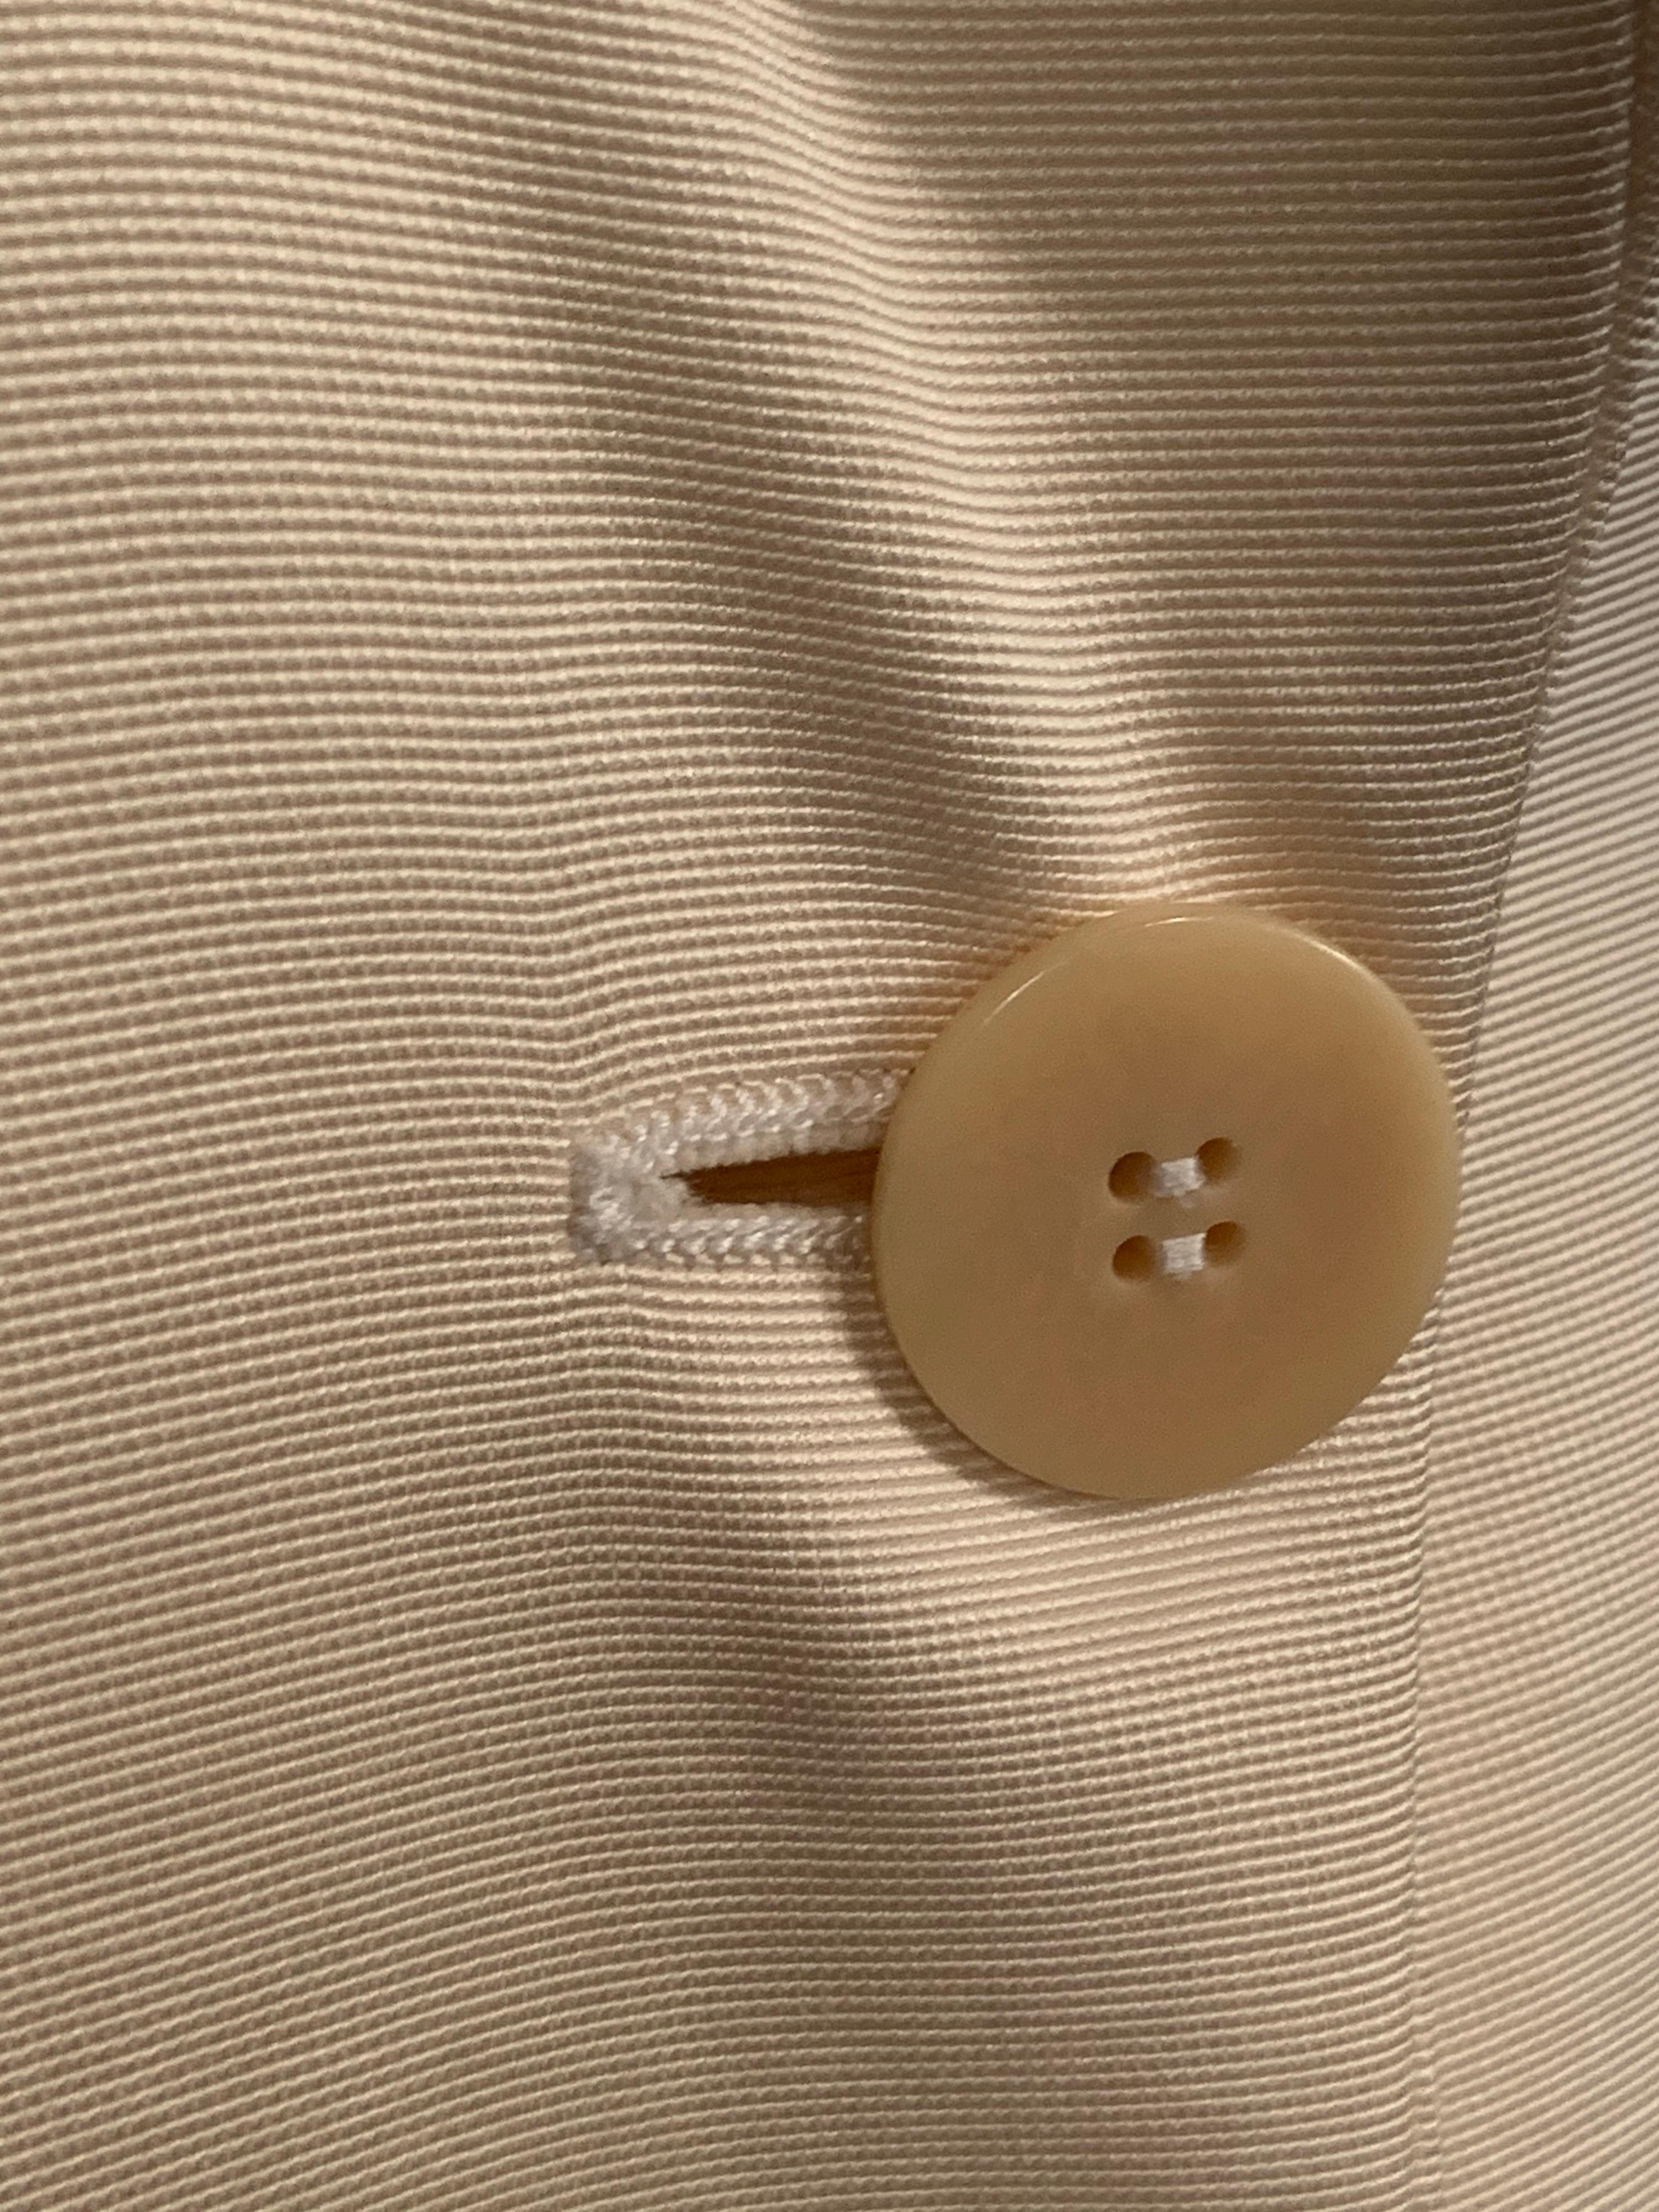 Giorgio Armani Cream Silk Single Button Jacket  In Excellent Condition For Sale In New Hope, PA